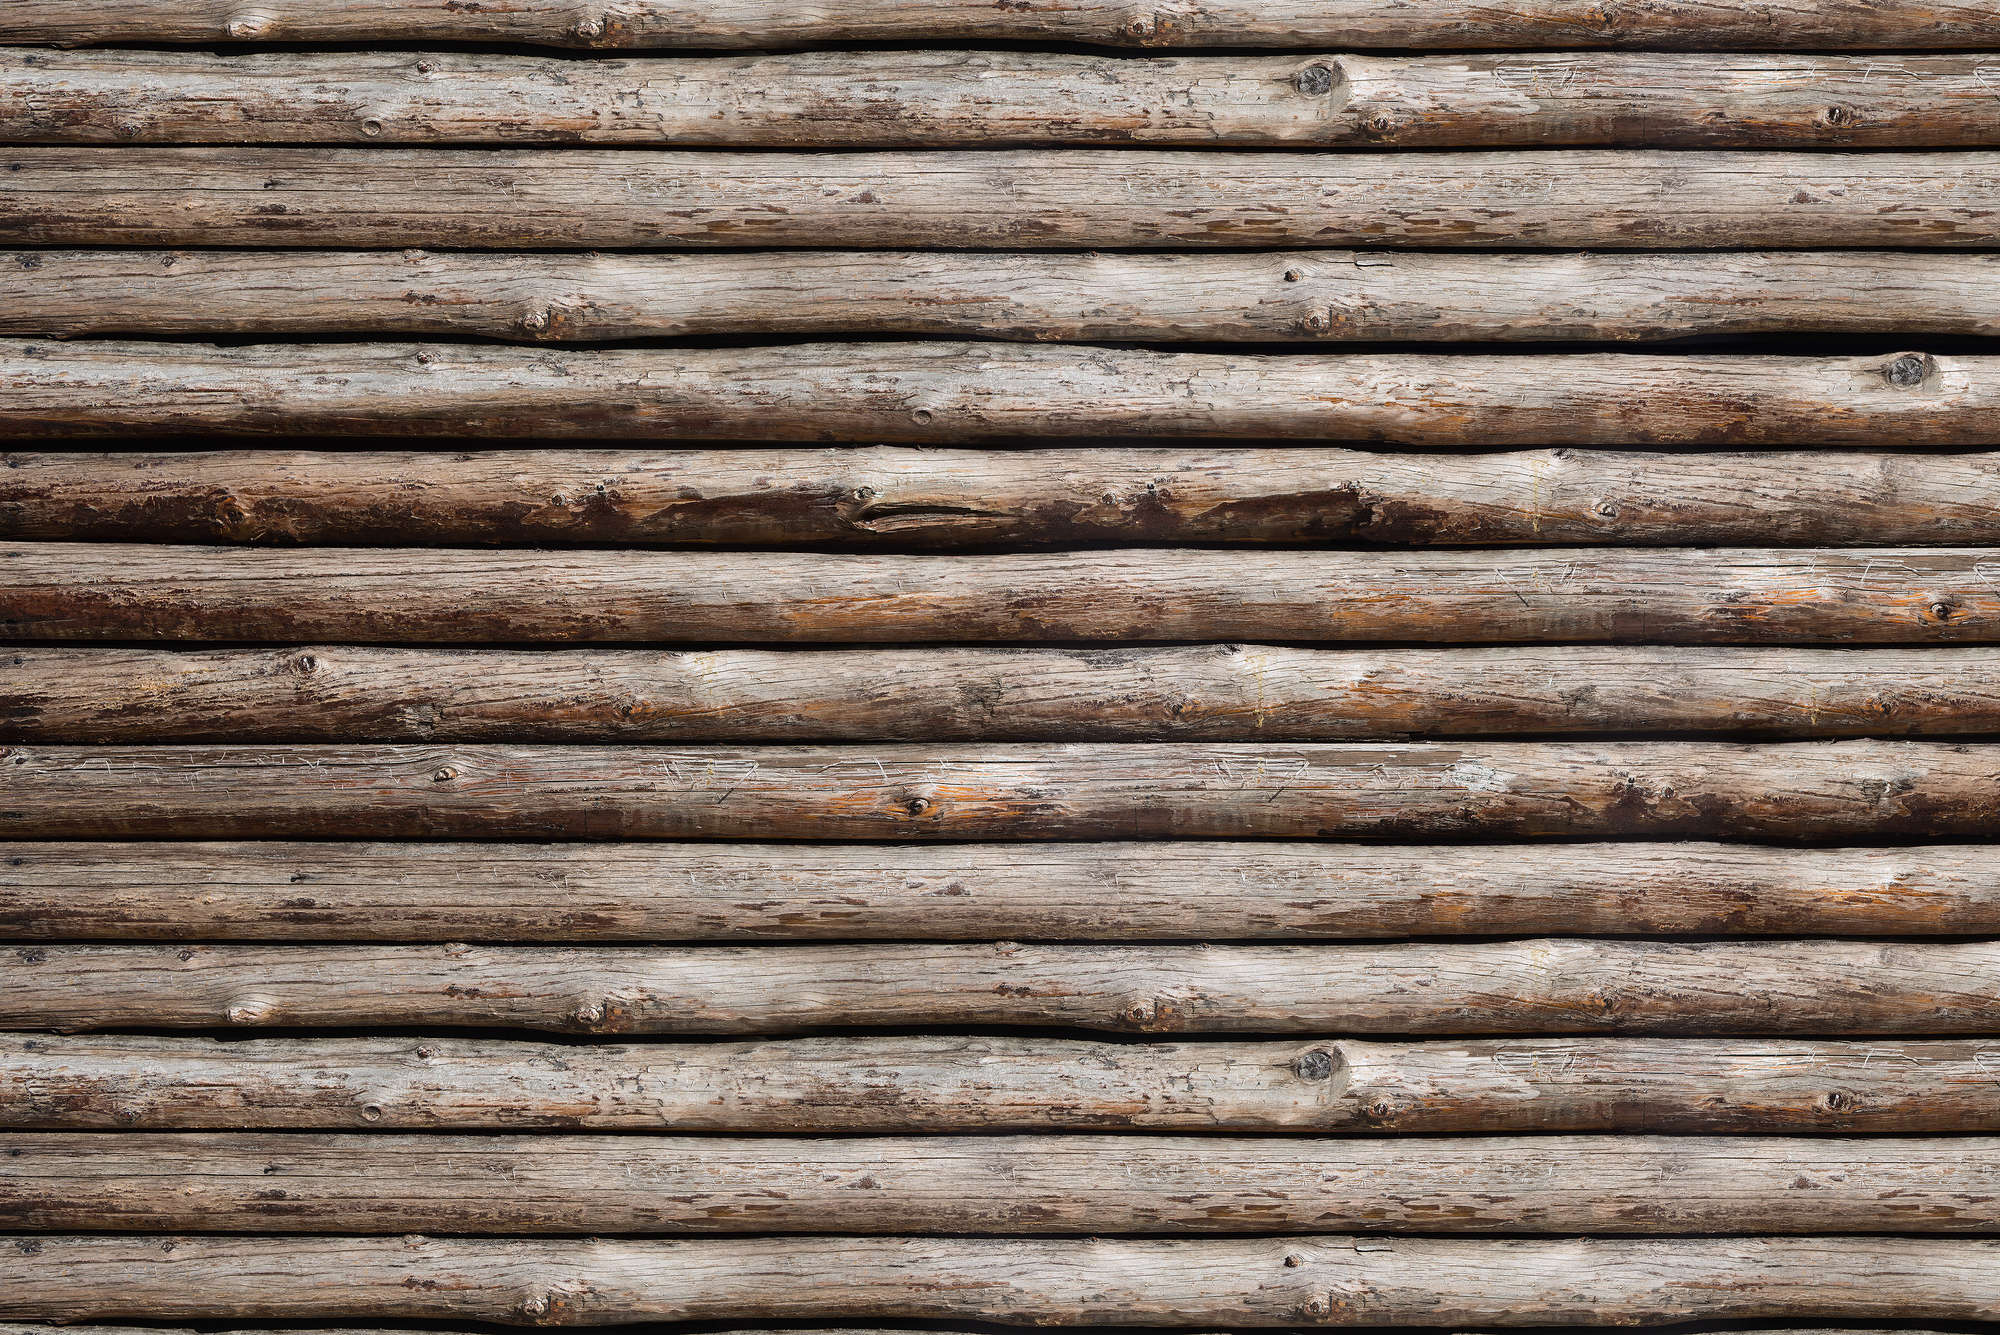             Holz Fototapete Blockhütten Wand auf Perlmutt Glattvlies
        